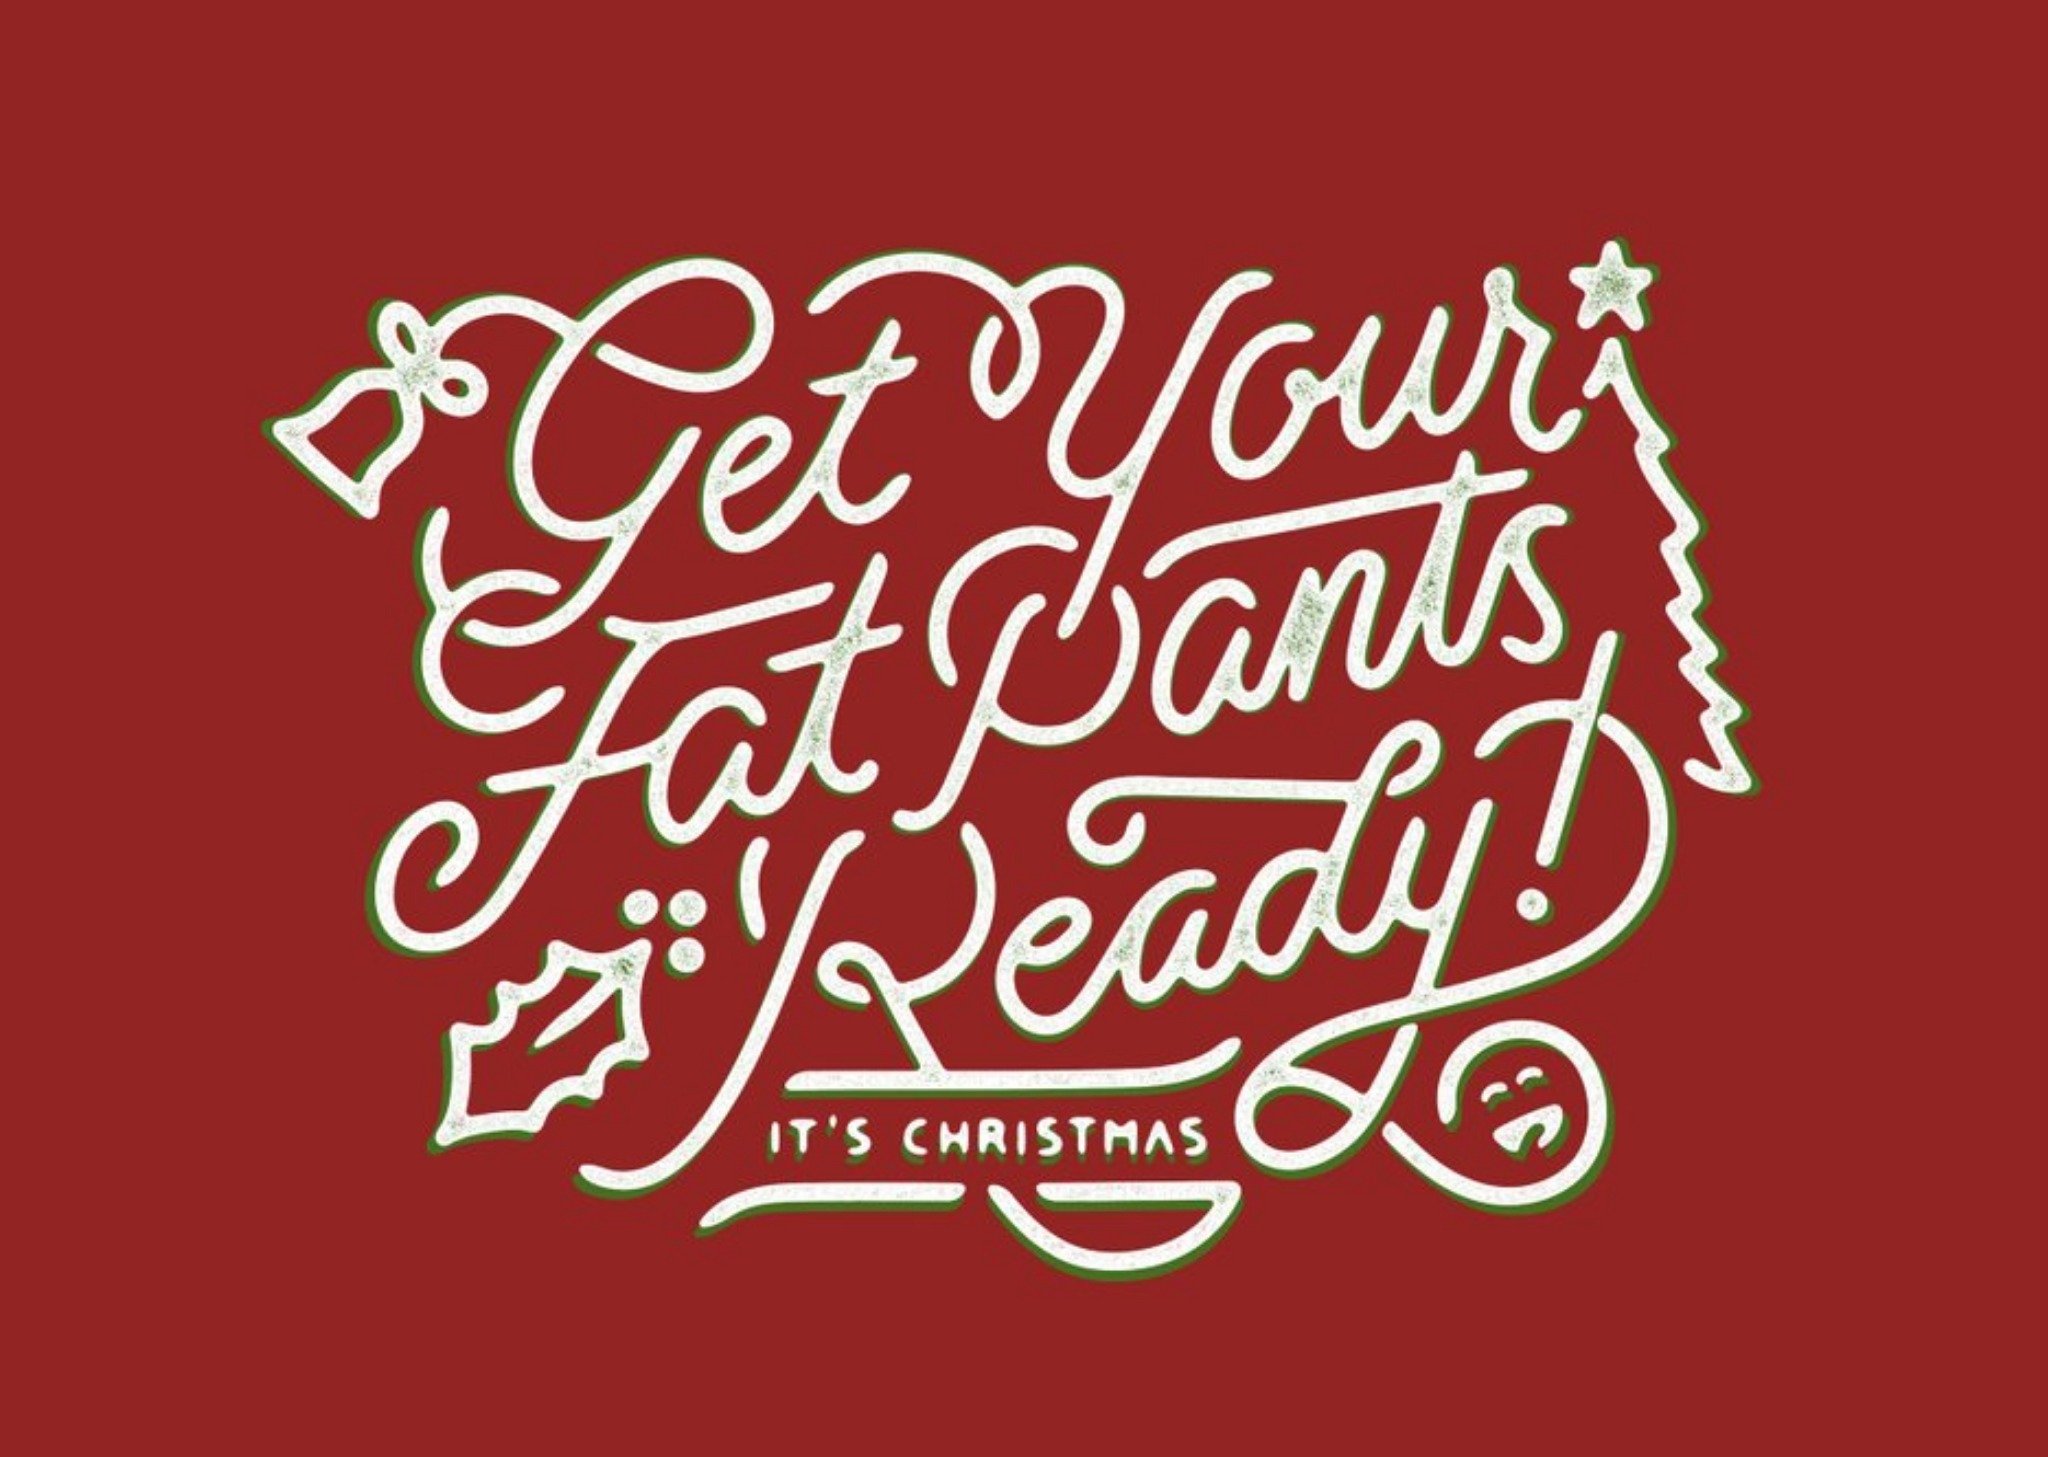 Moonpig Get Your Fat Pants Ready Christmas Card Ecard